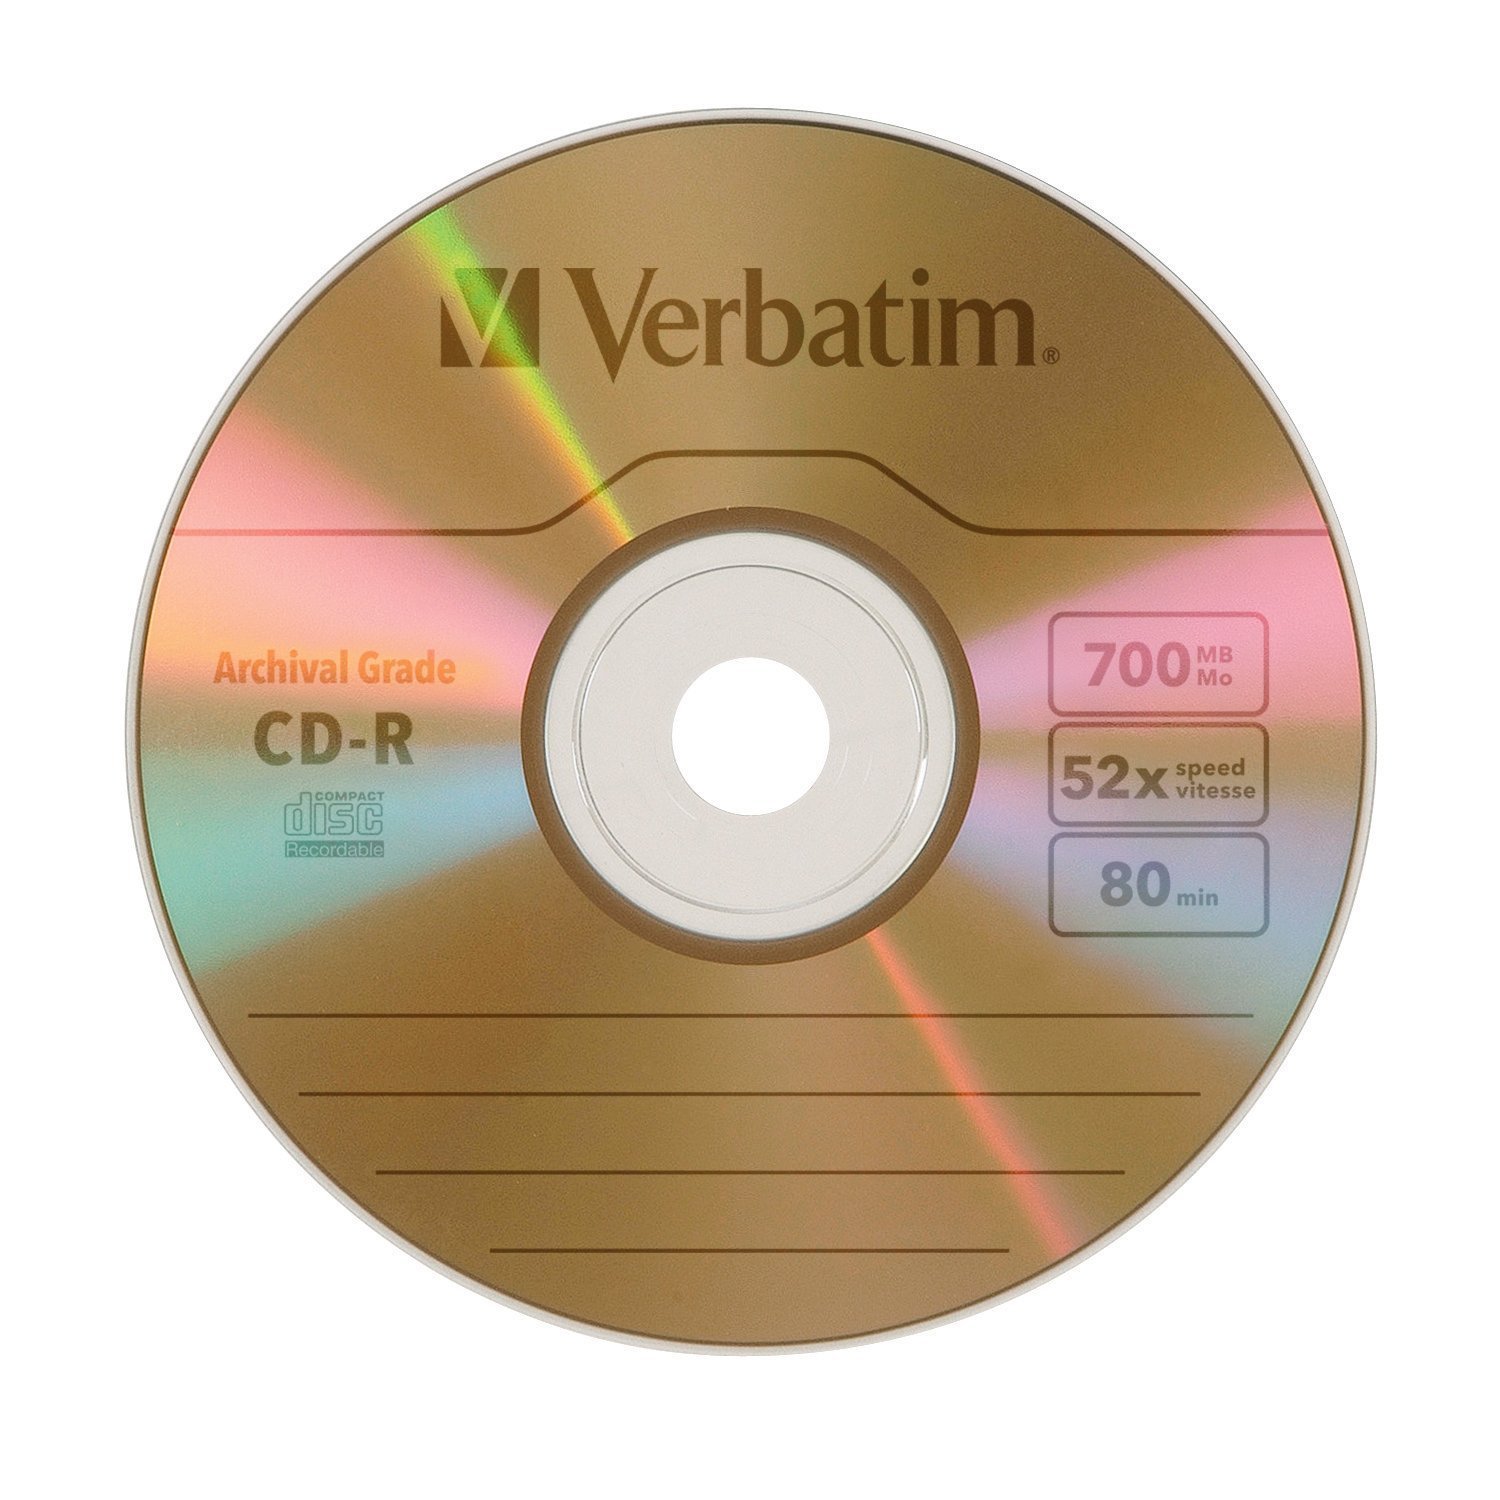 Amazon.com: Verbatim 700MB 52x UltraLife Archival Grade Gold ...